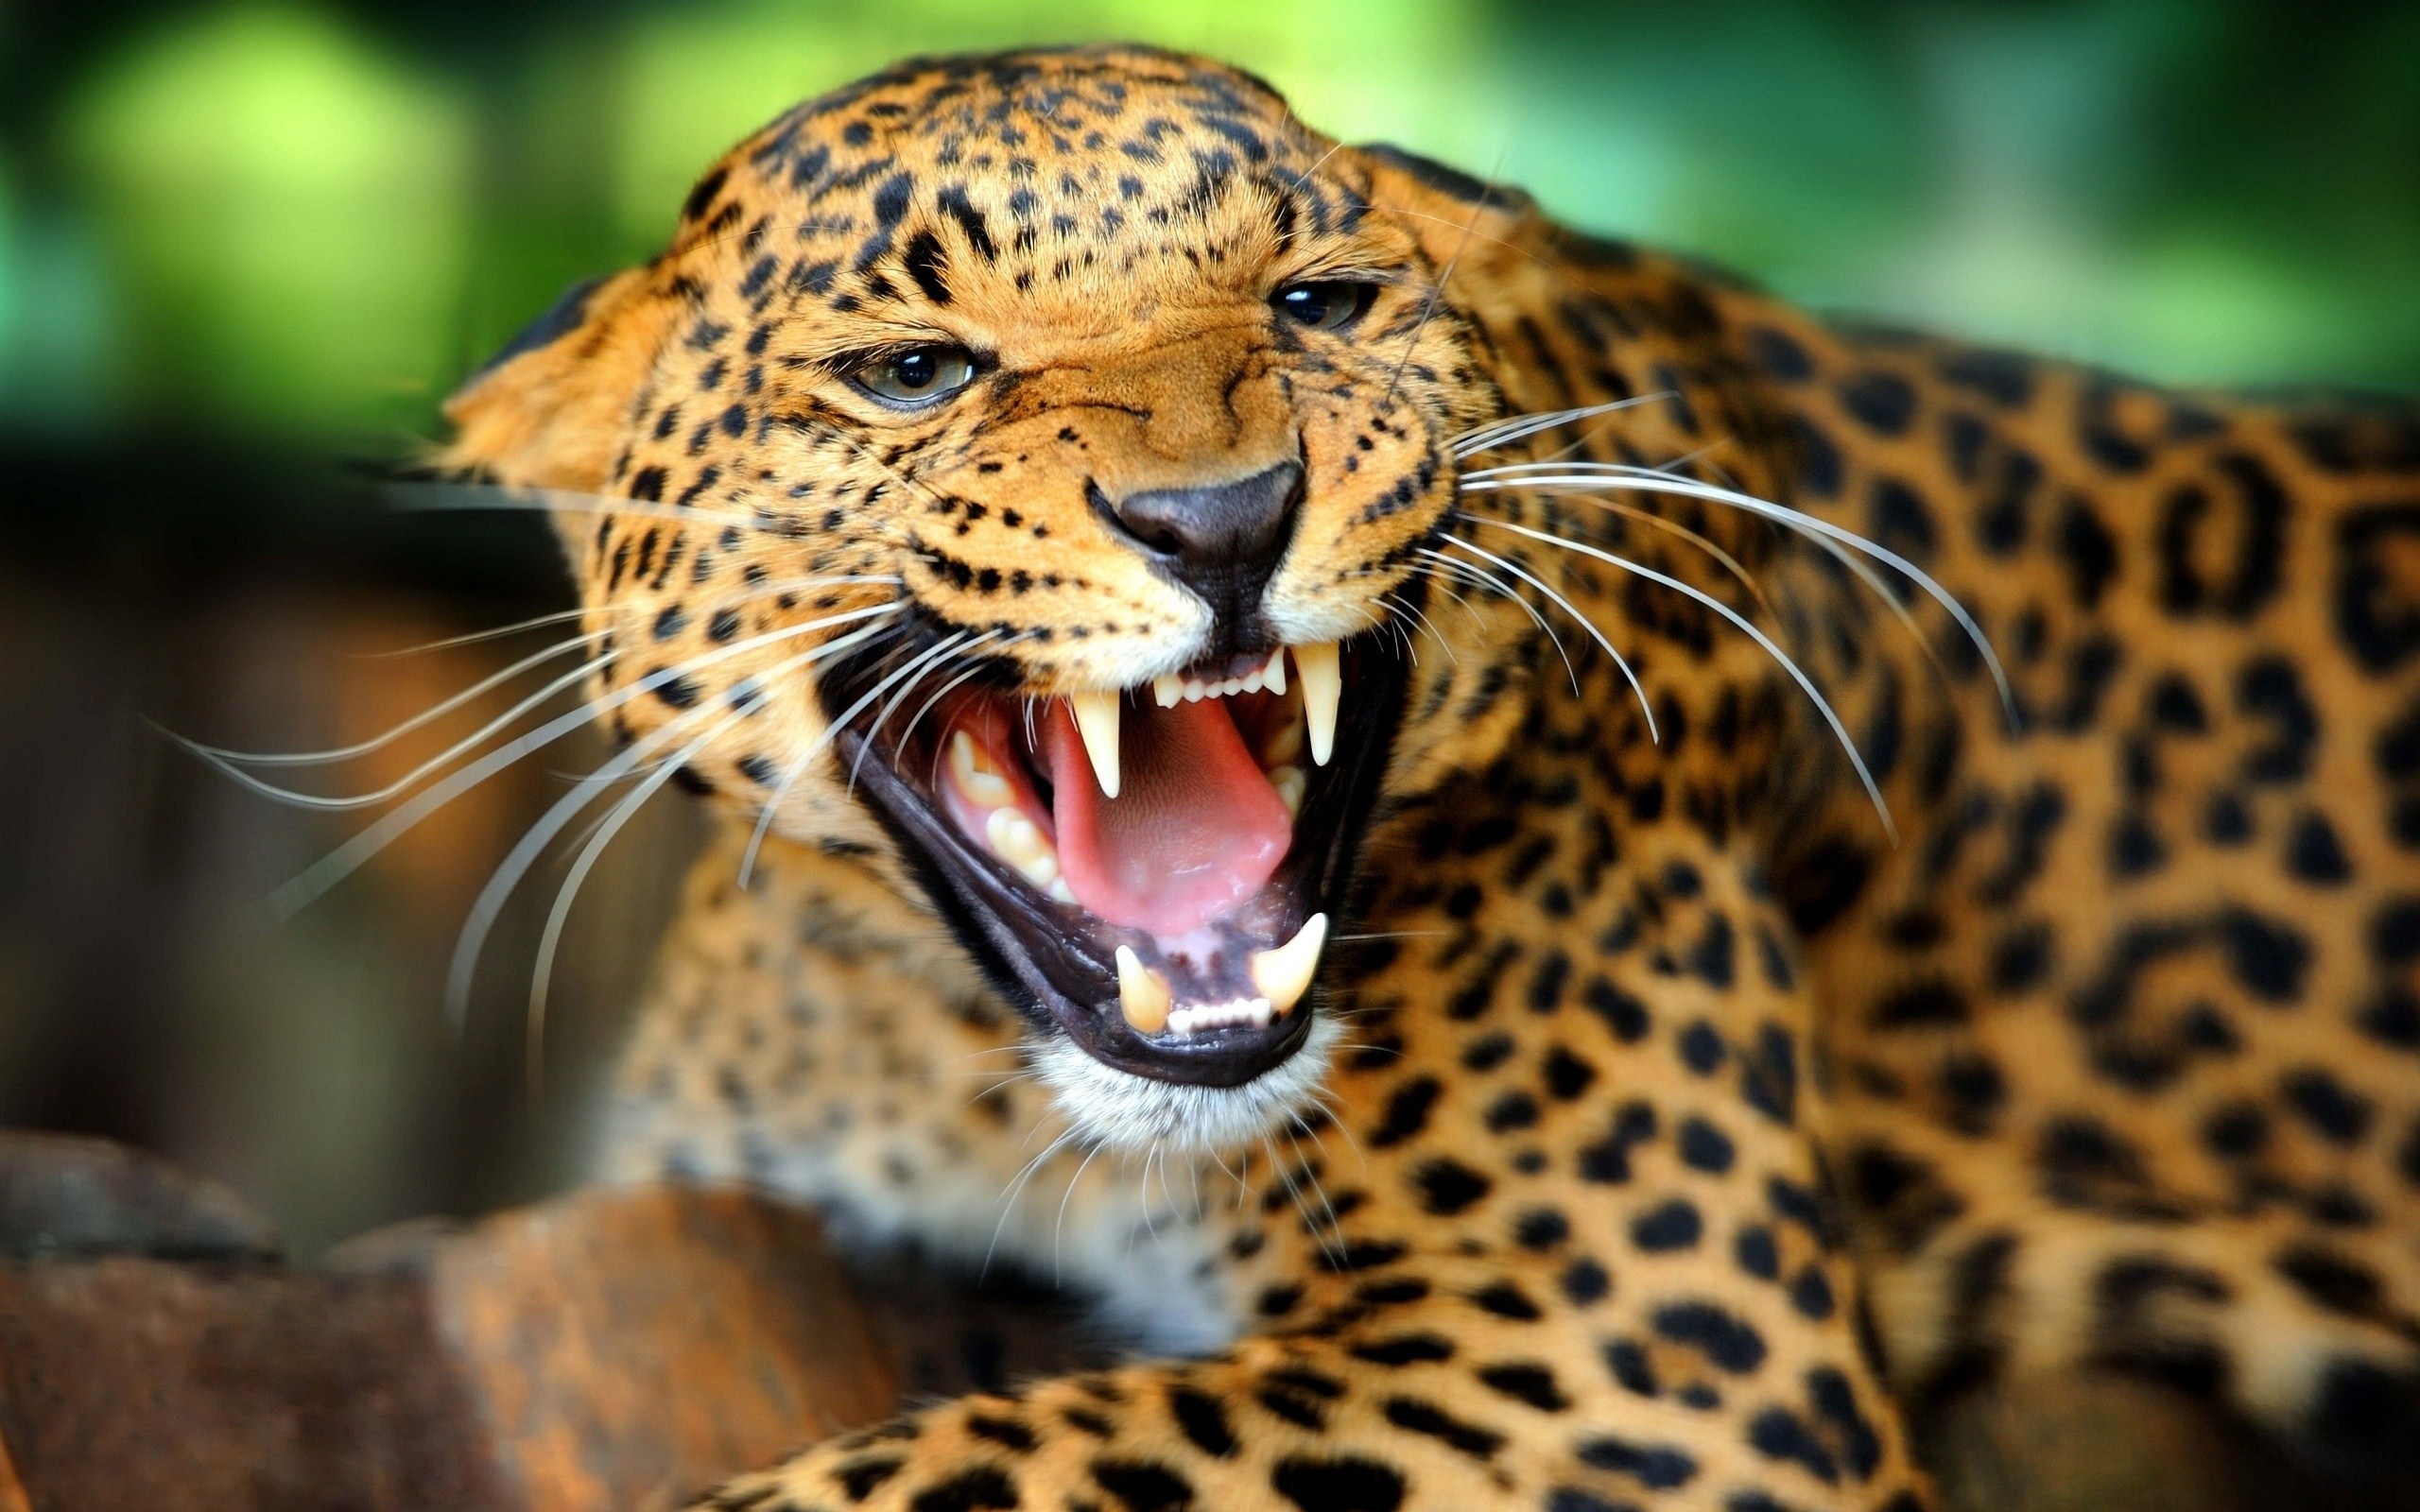 Jungle Animal, Wild animal wallpaper, Untamed creatures, Animal kingdom beauty, 2560x1600 HD Desktop